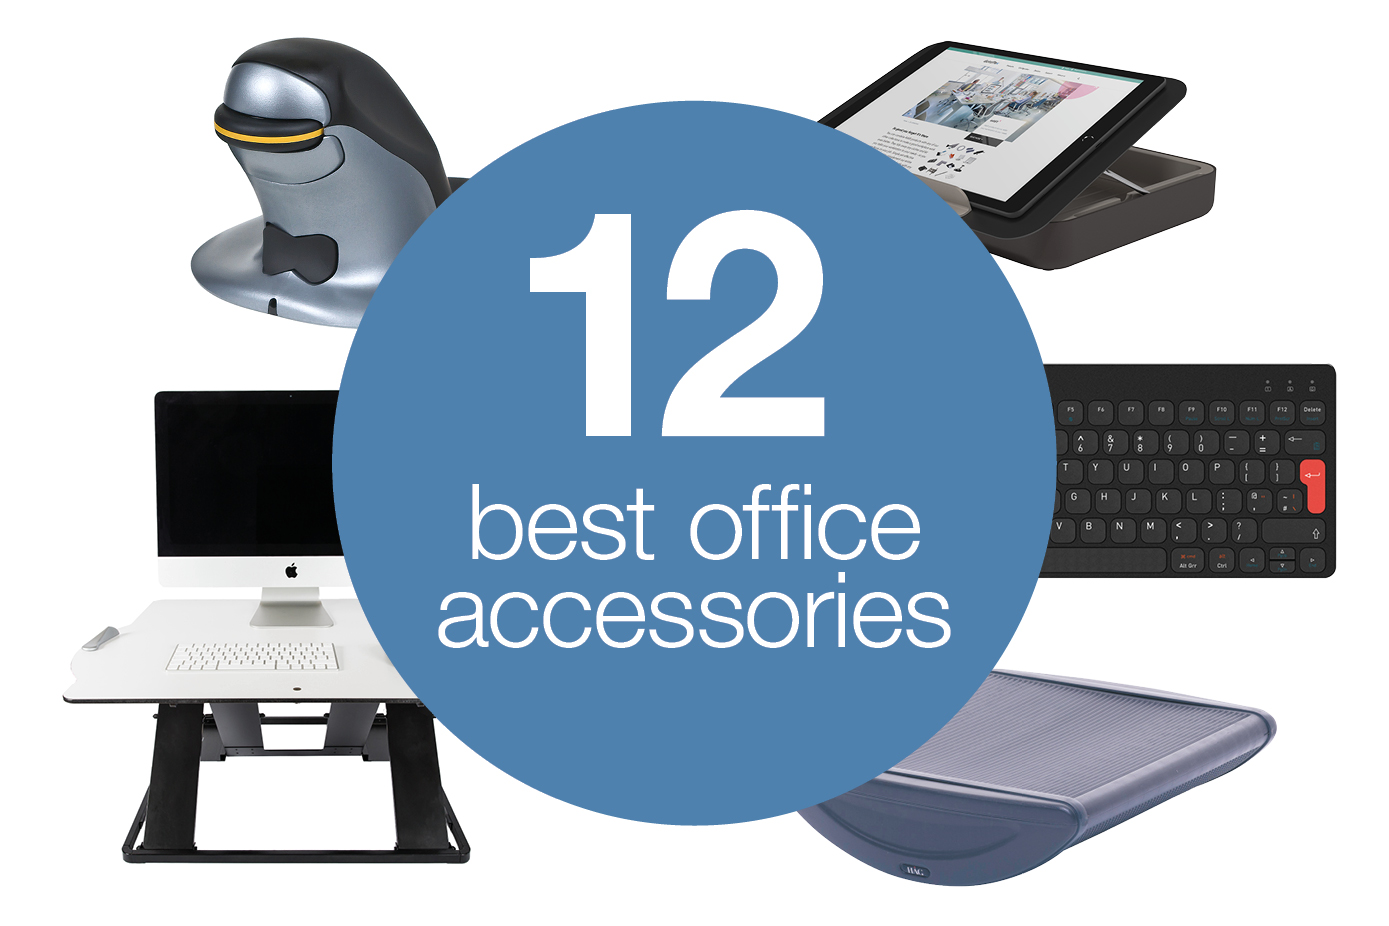 Best office accessories